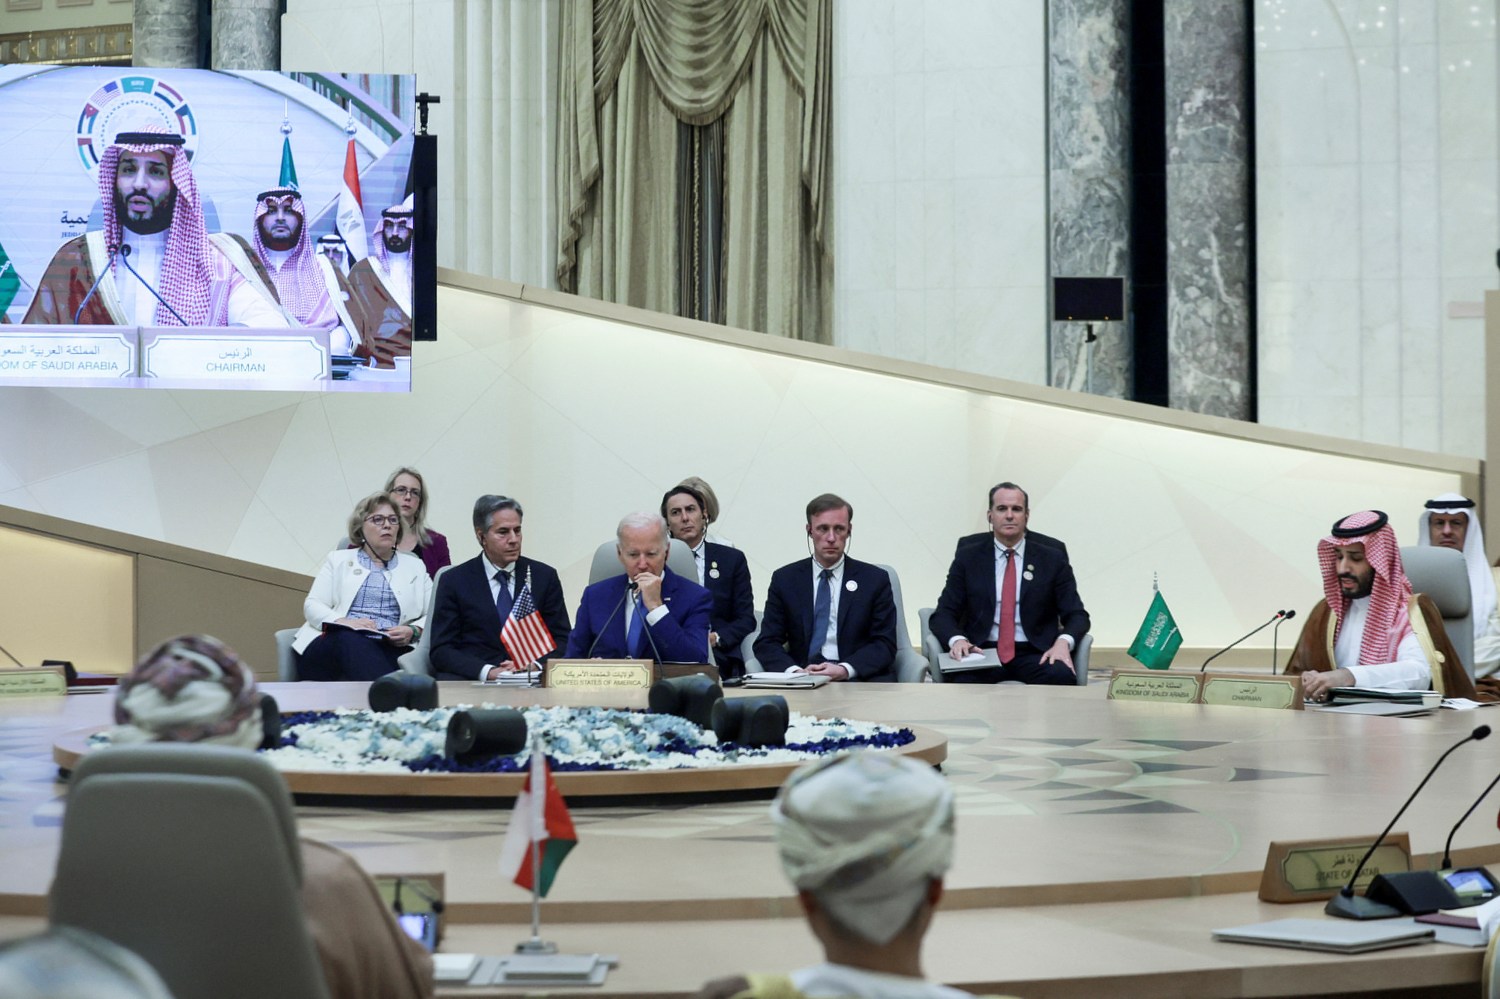 U.S. President Joe Biden and Saudi Crown Prince Mohammed bin Salman attend an Arab summit, in Jeddah, Saudi Arabia, July 16, 2022. REUTERS/Evelyn Hockstein